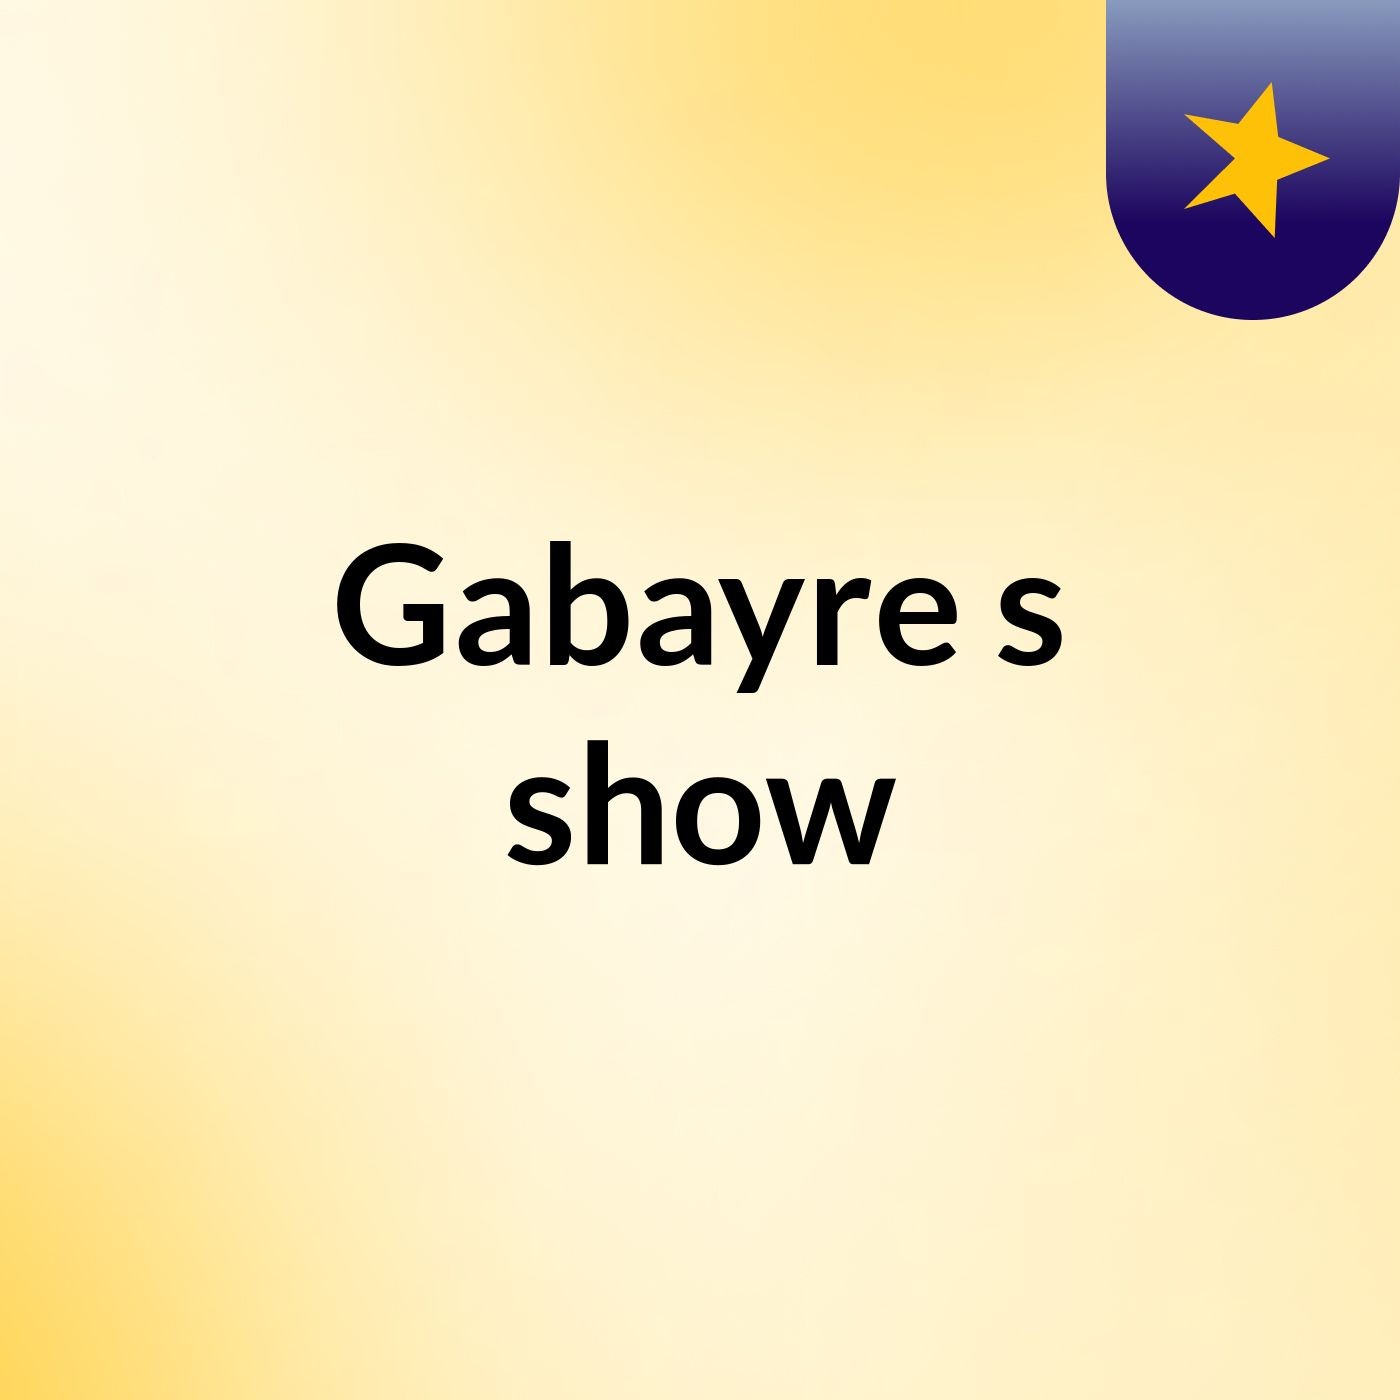 Gabayre's show